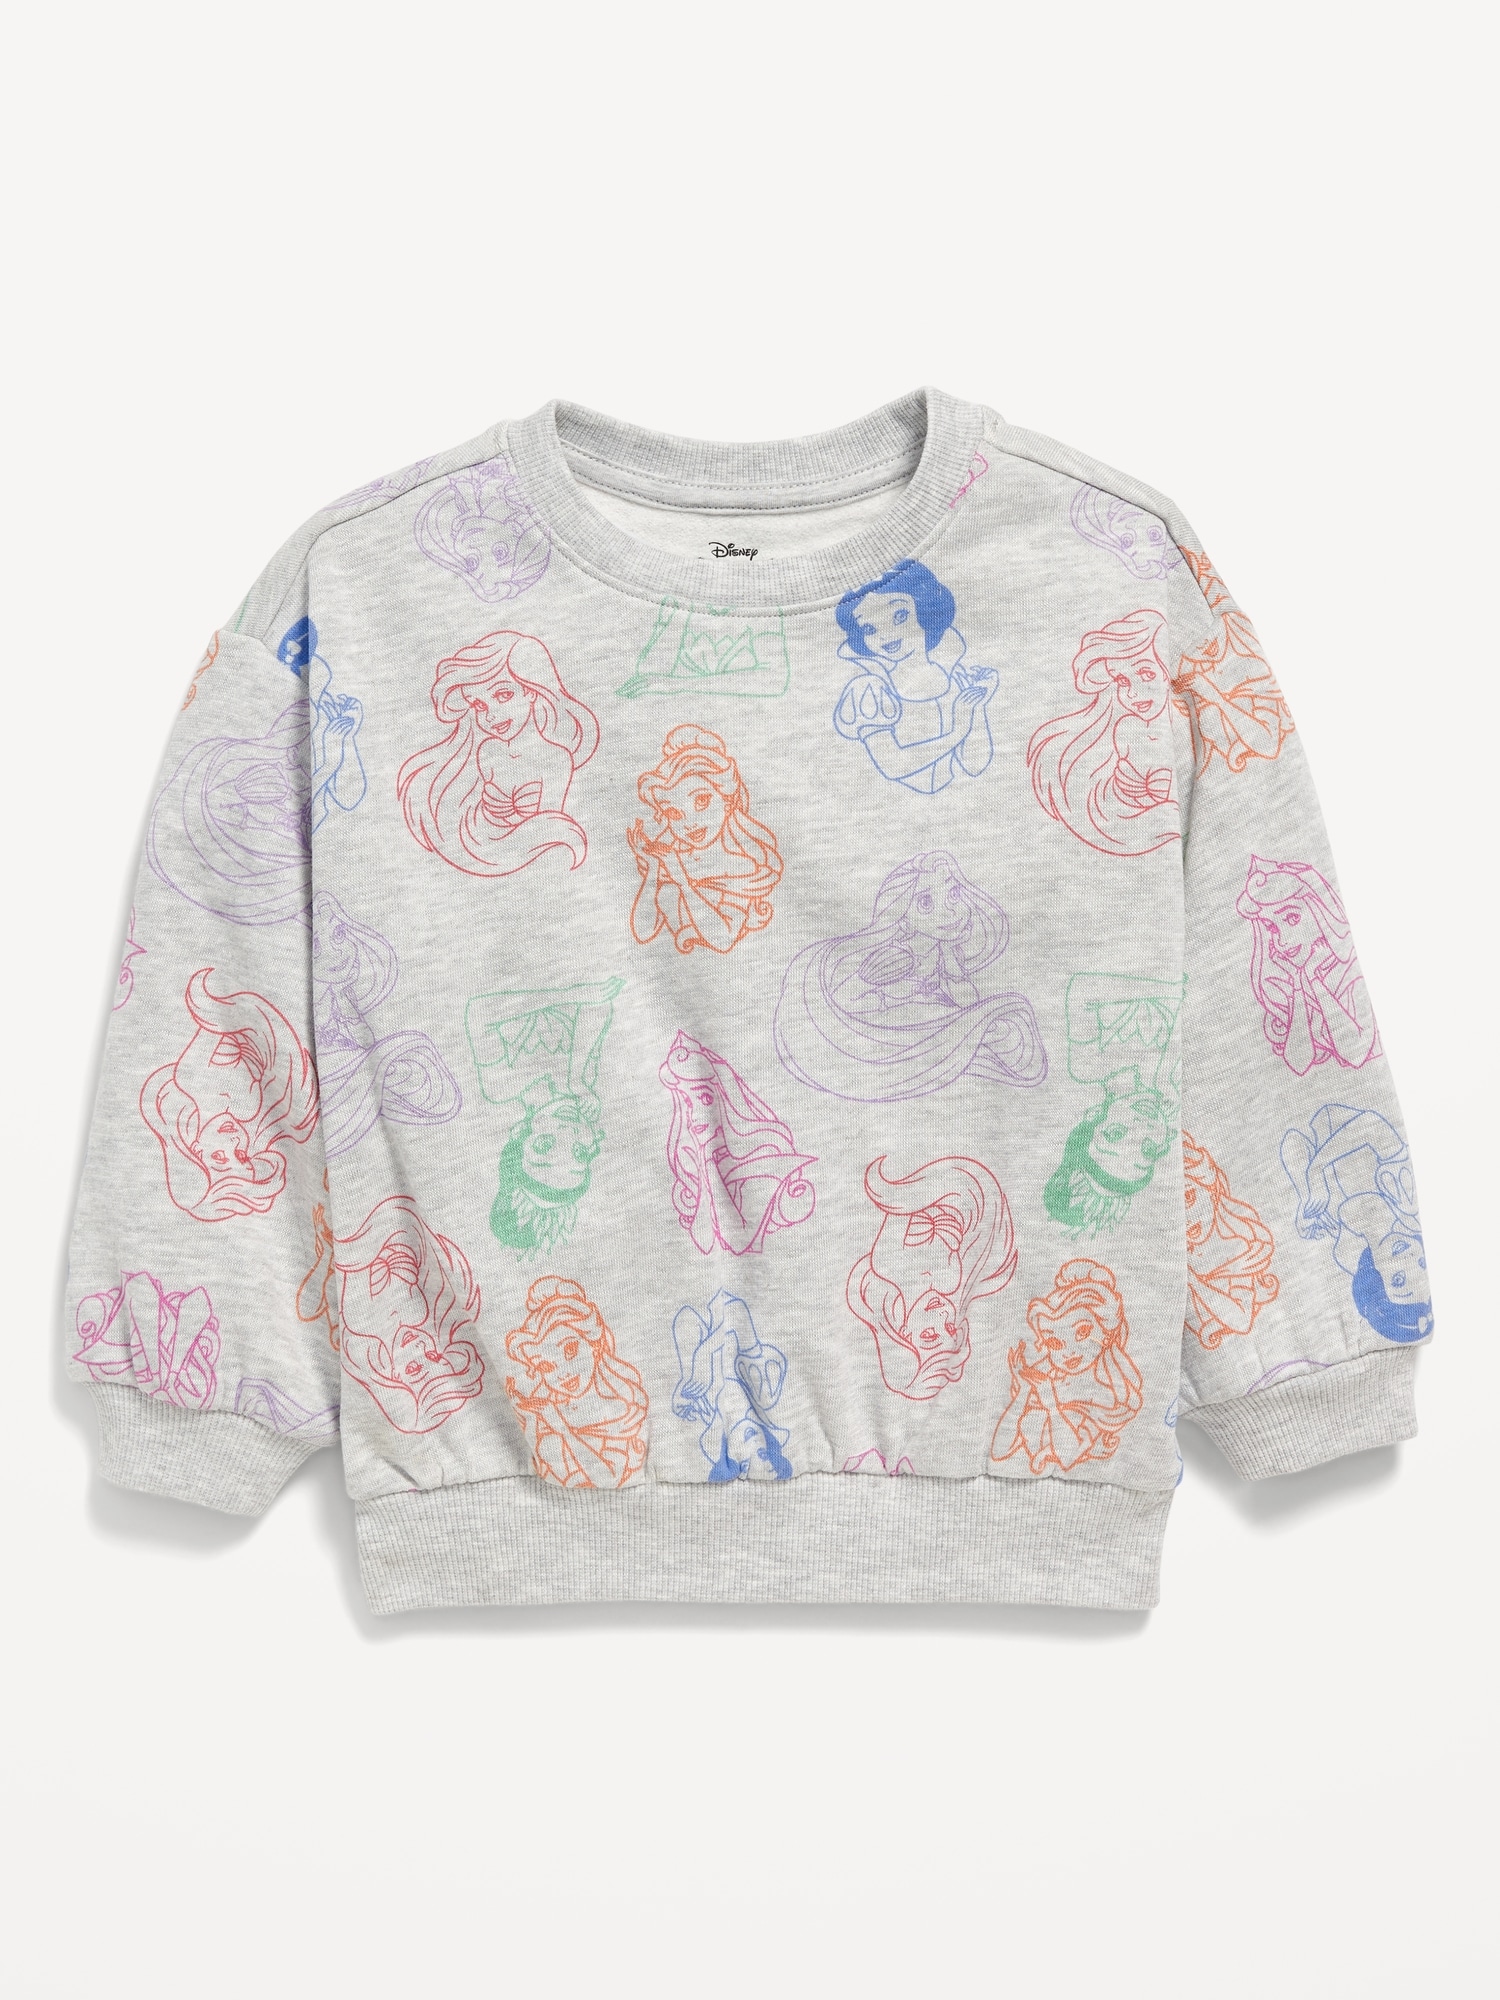 Disney© Drop-Shoulder Graphic Sweatshirt for Toddler Girls